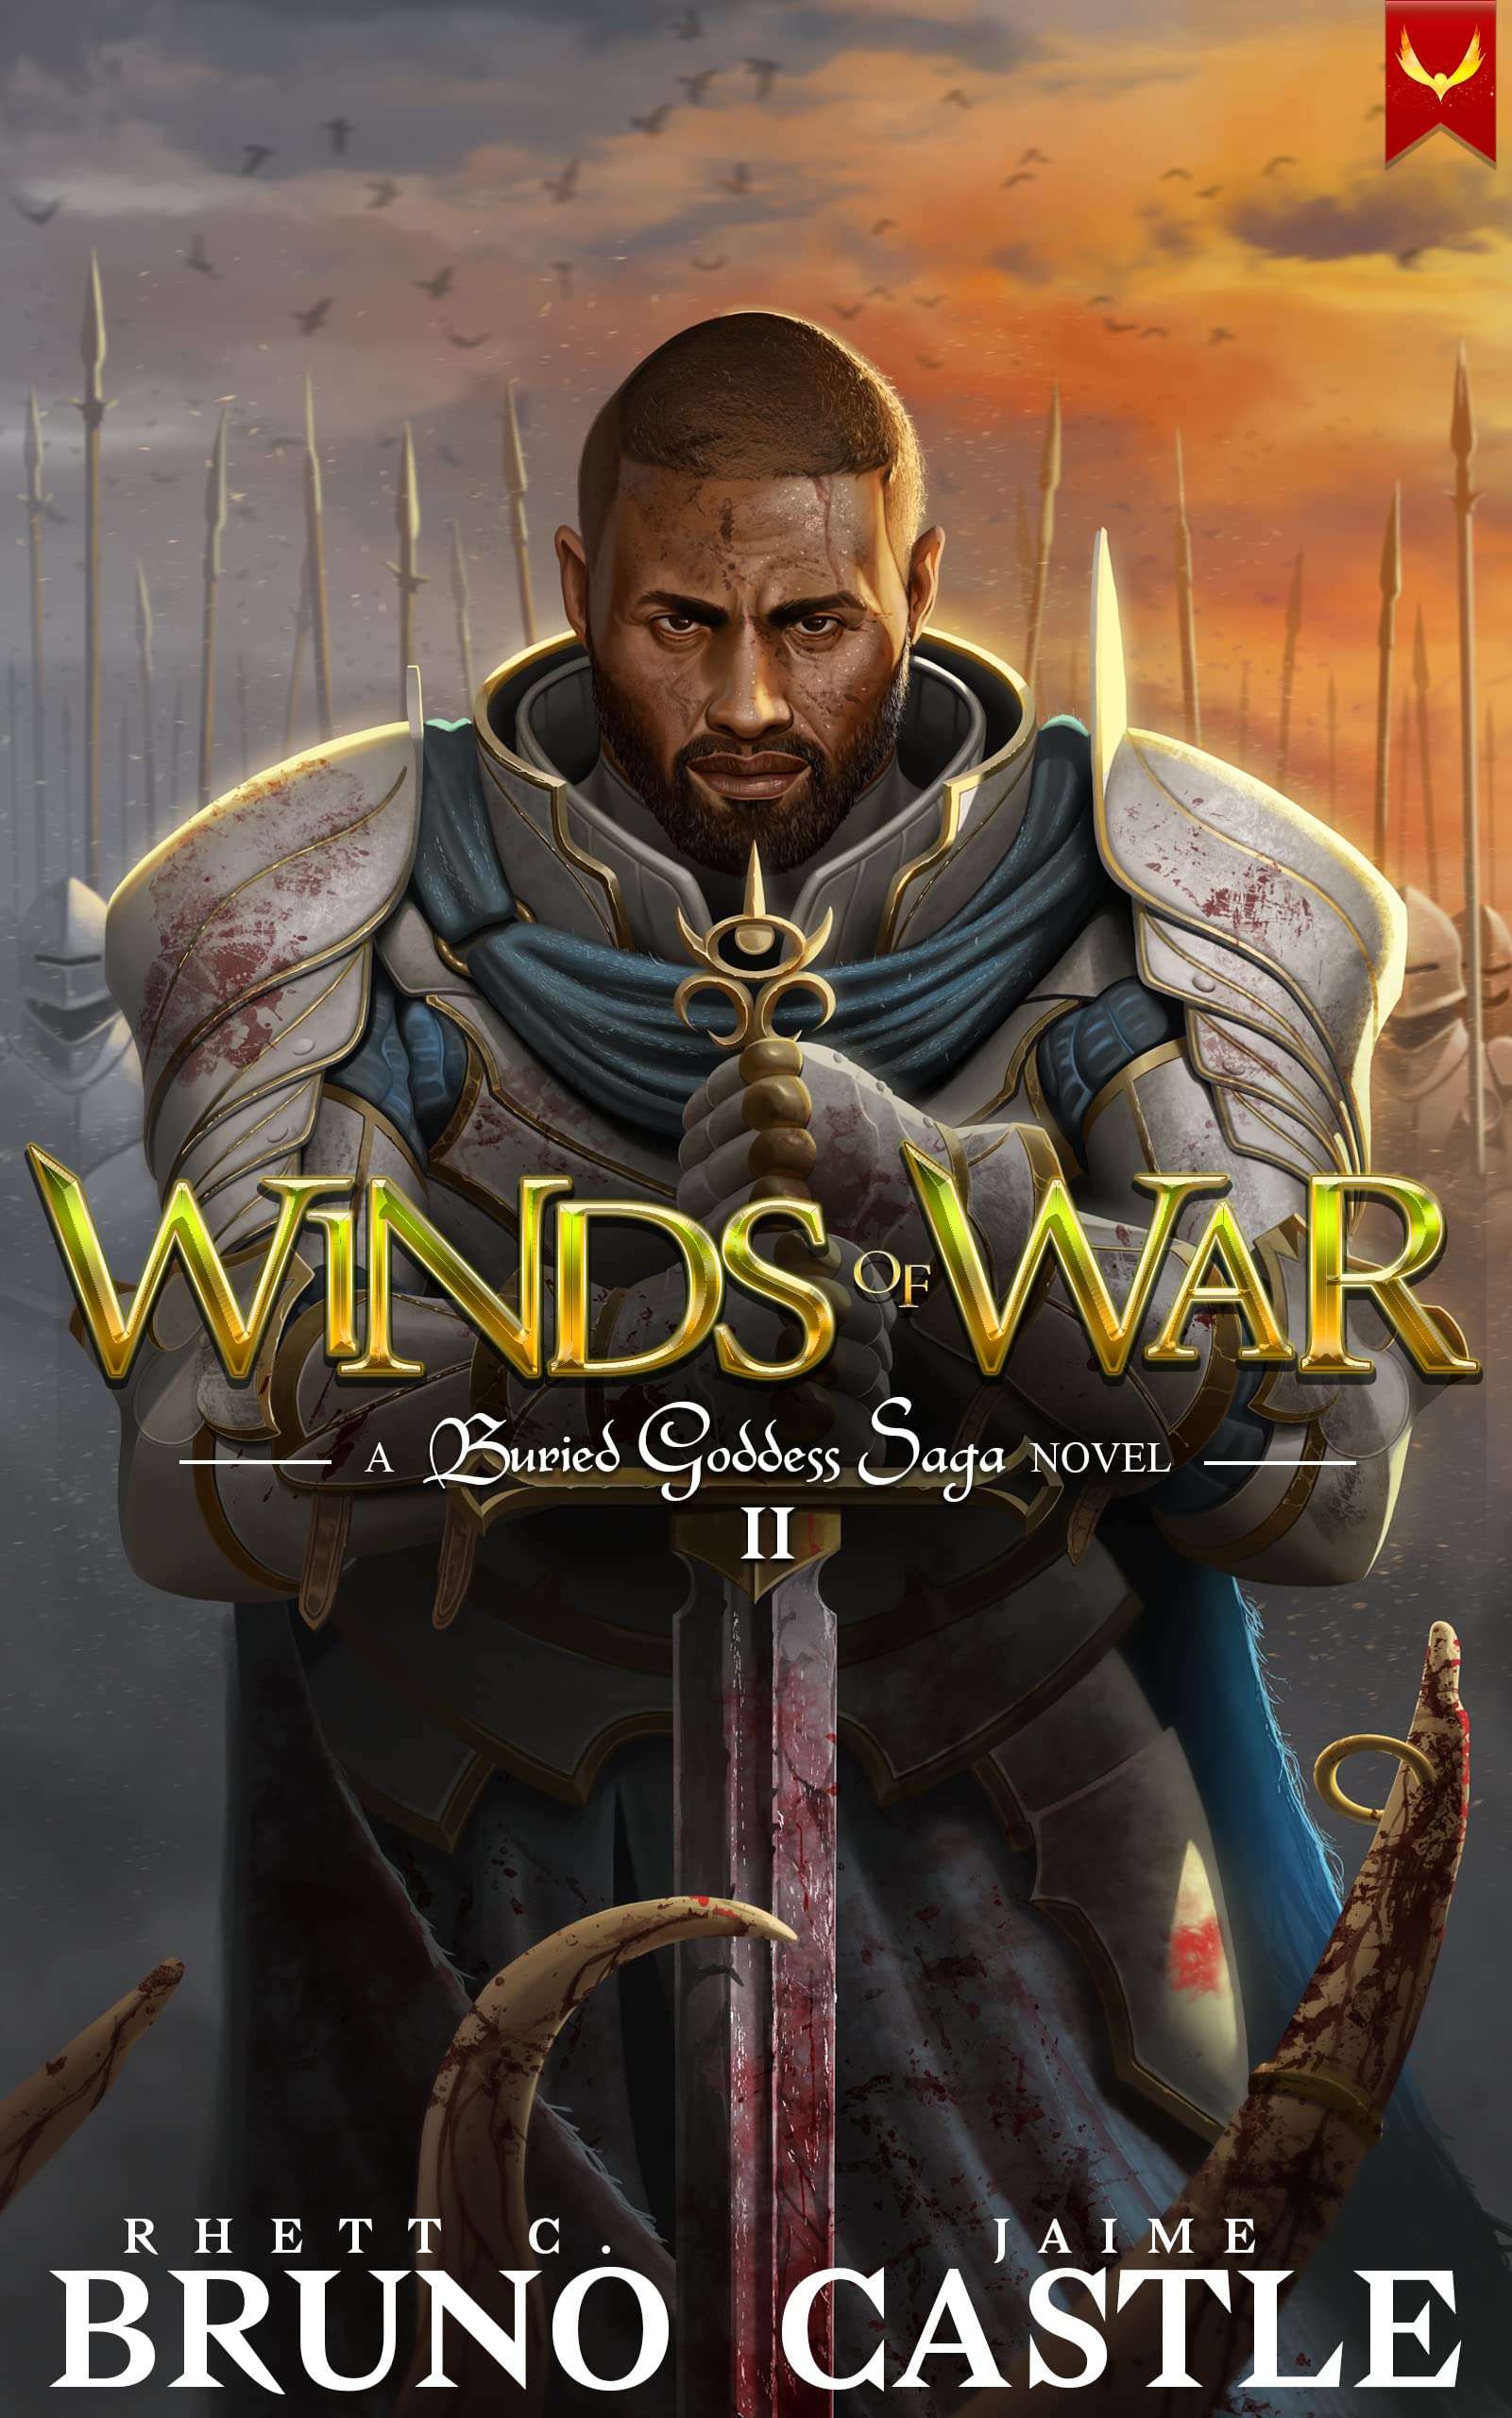 Book Cover Winds of War: (Buried Goddess Saga Book 2)